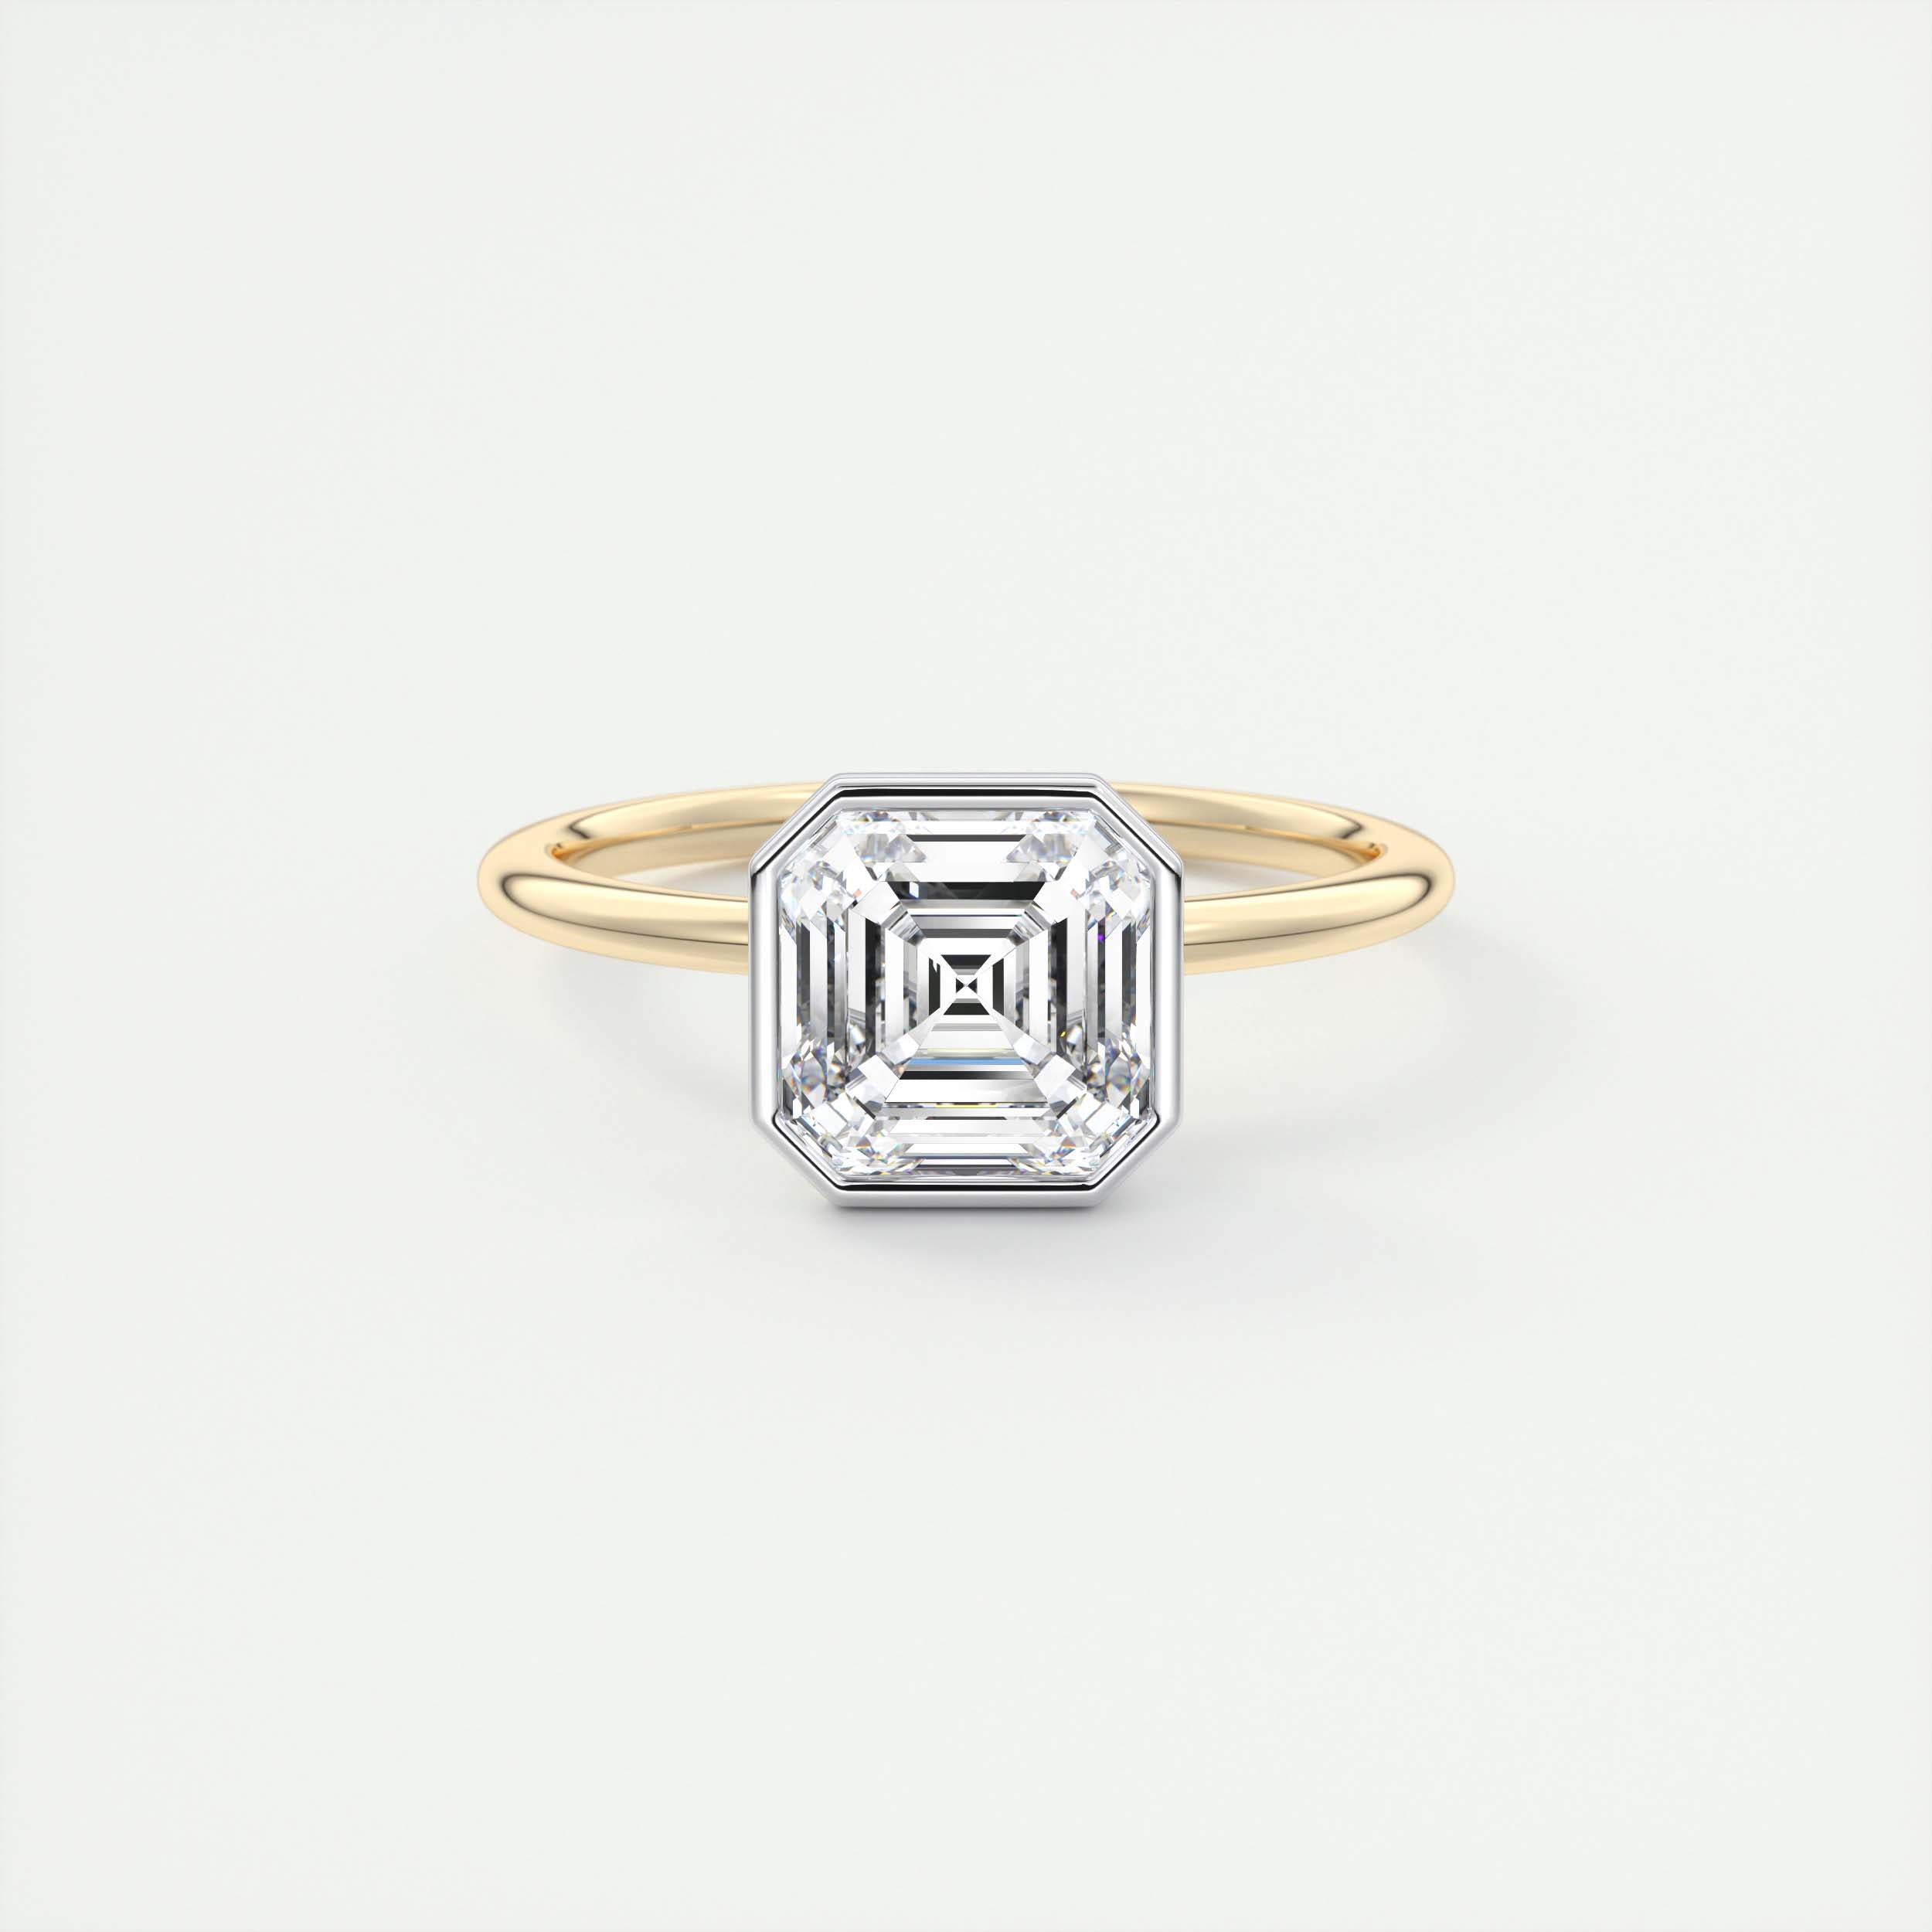 The Asscher Bezel Solitaire Engagement Ring by Frank Darling